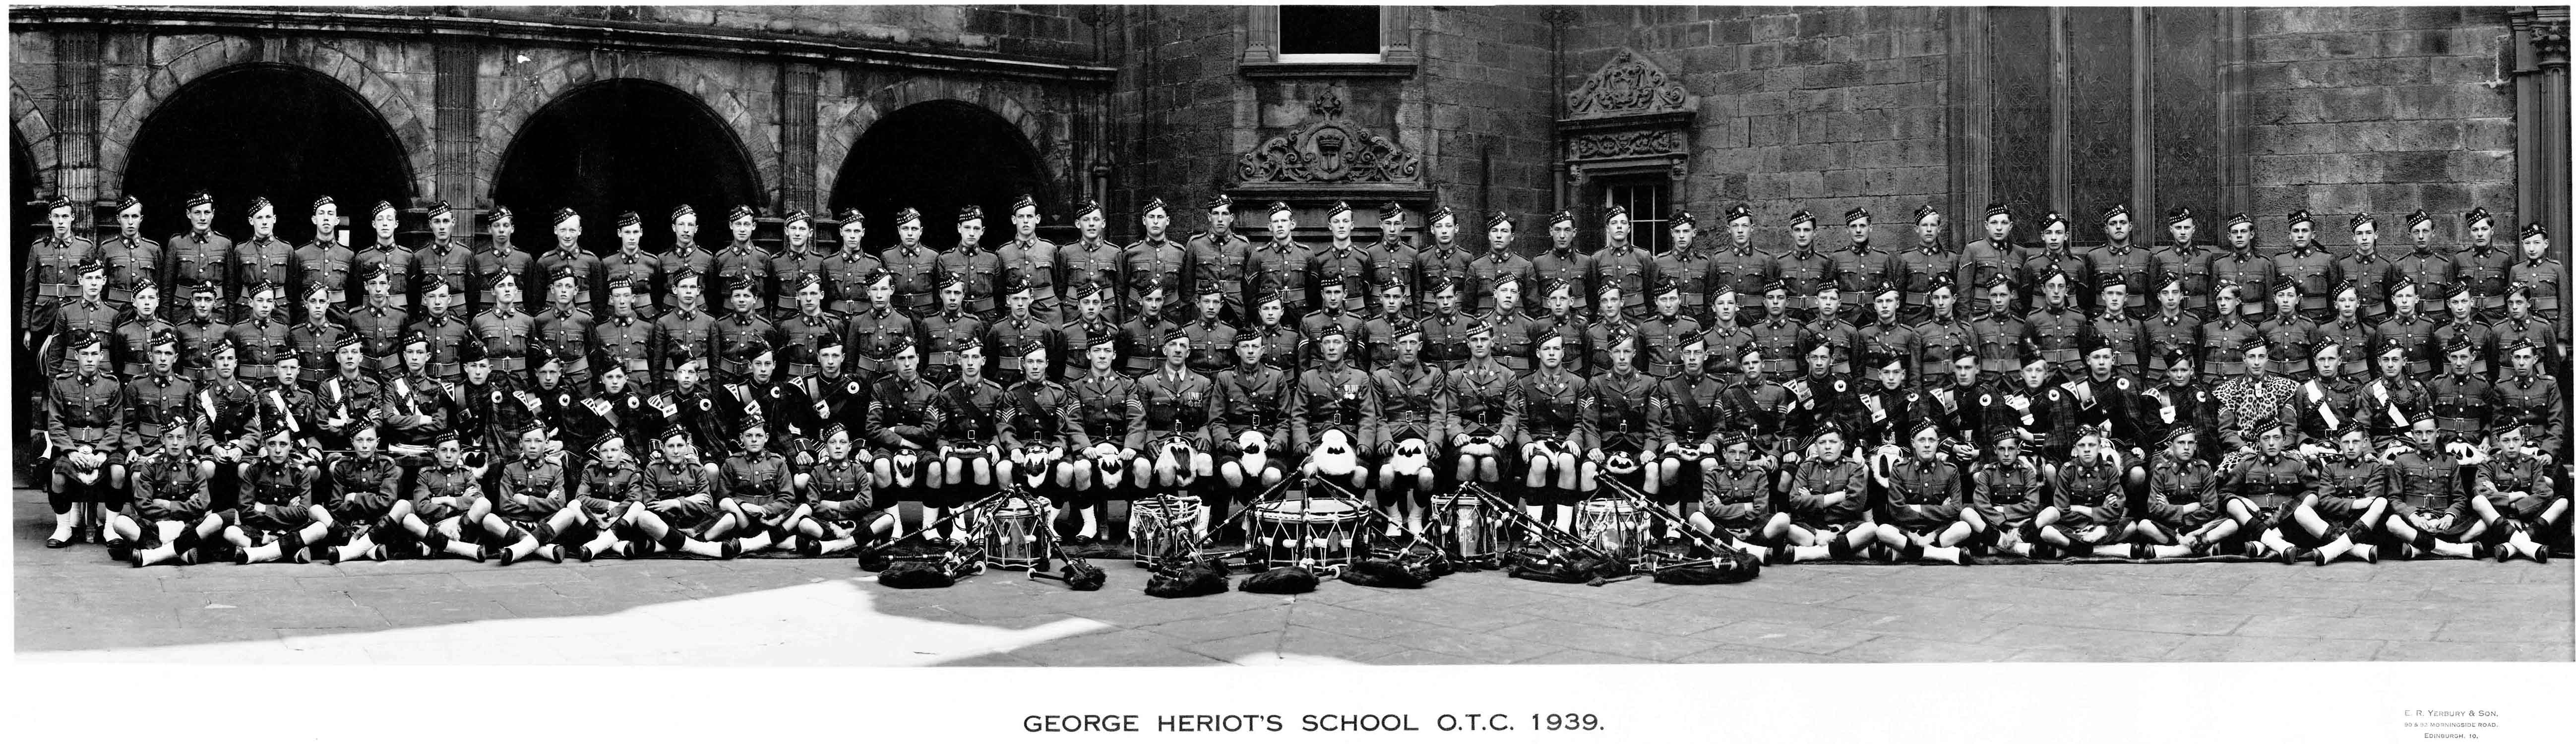 Edinburgh, Scotland 1939. George Heriot's School OTC. My father is near the center, second row.